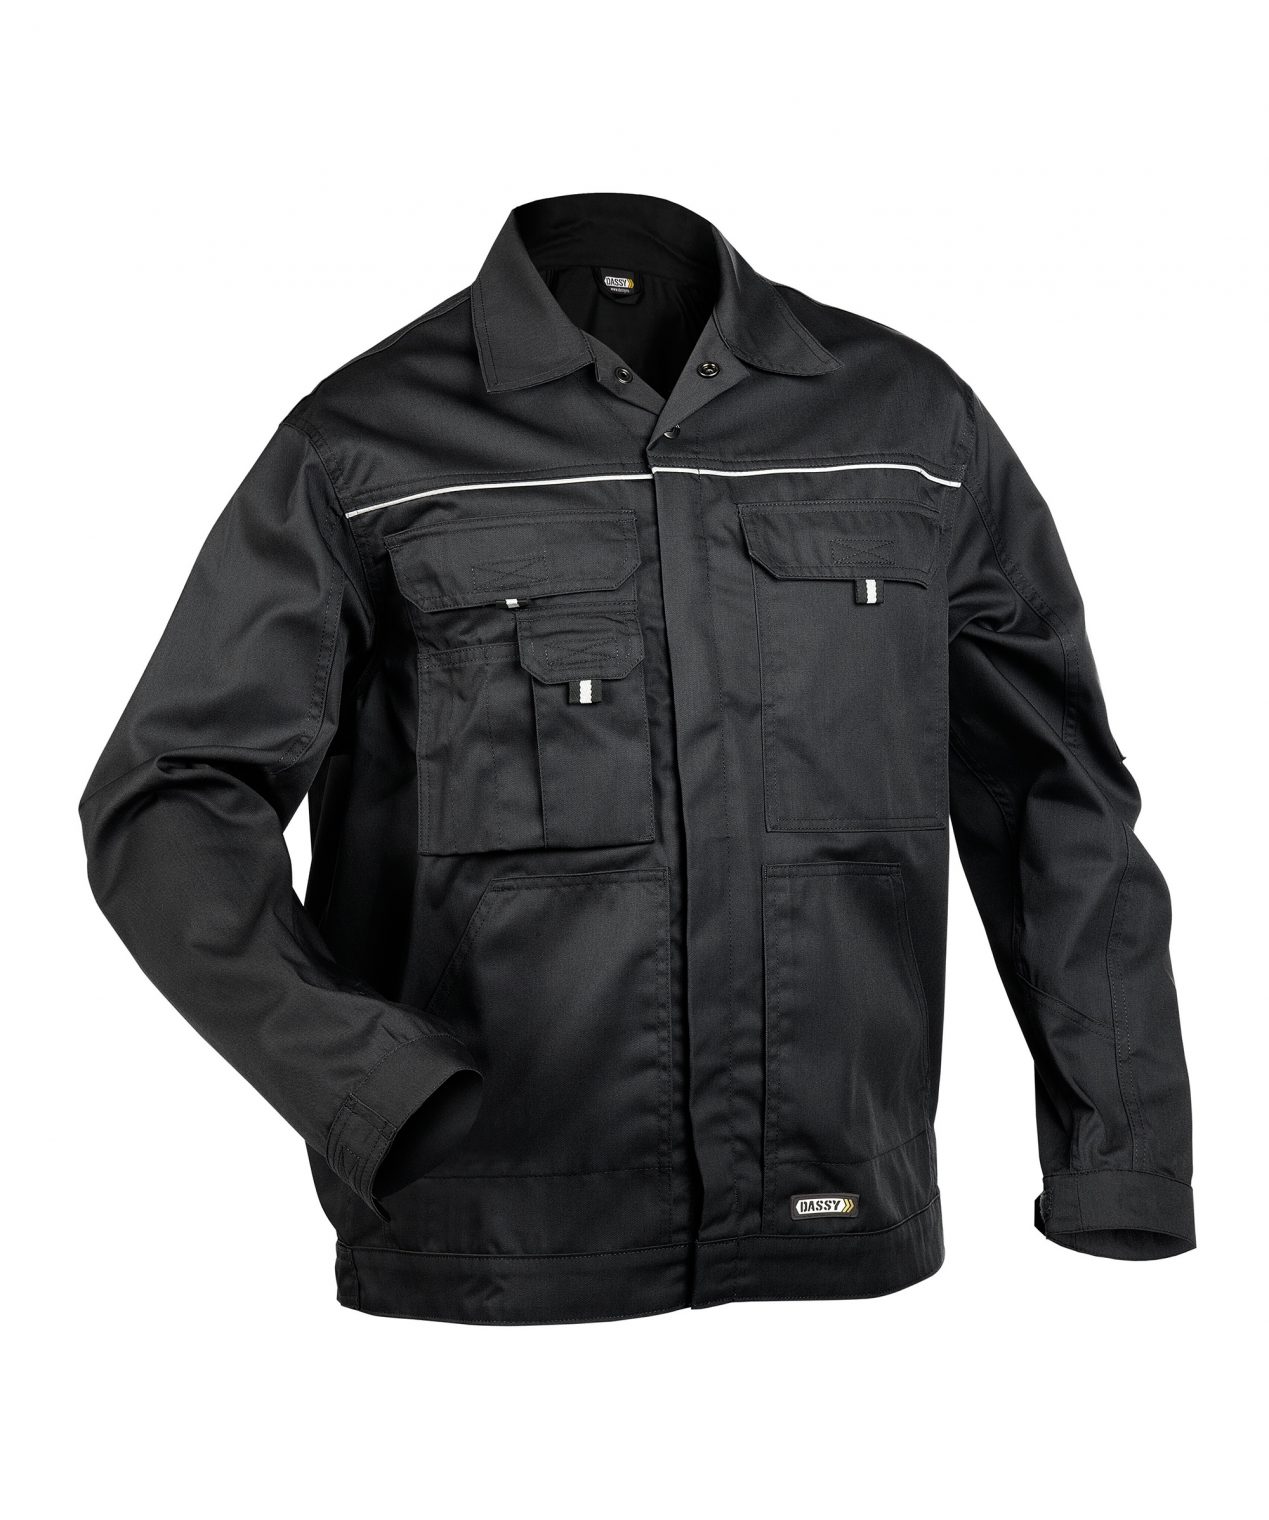 nouville work jacket black front